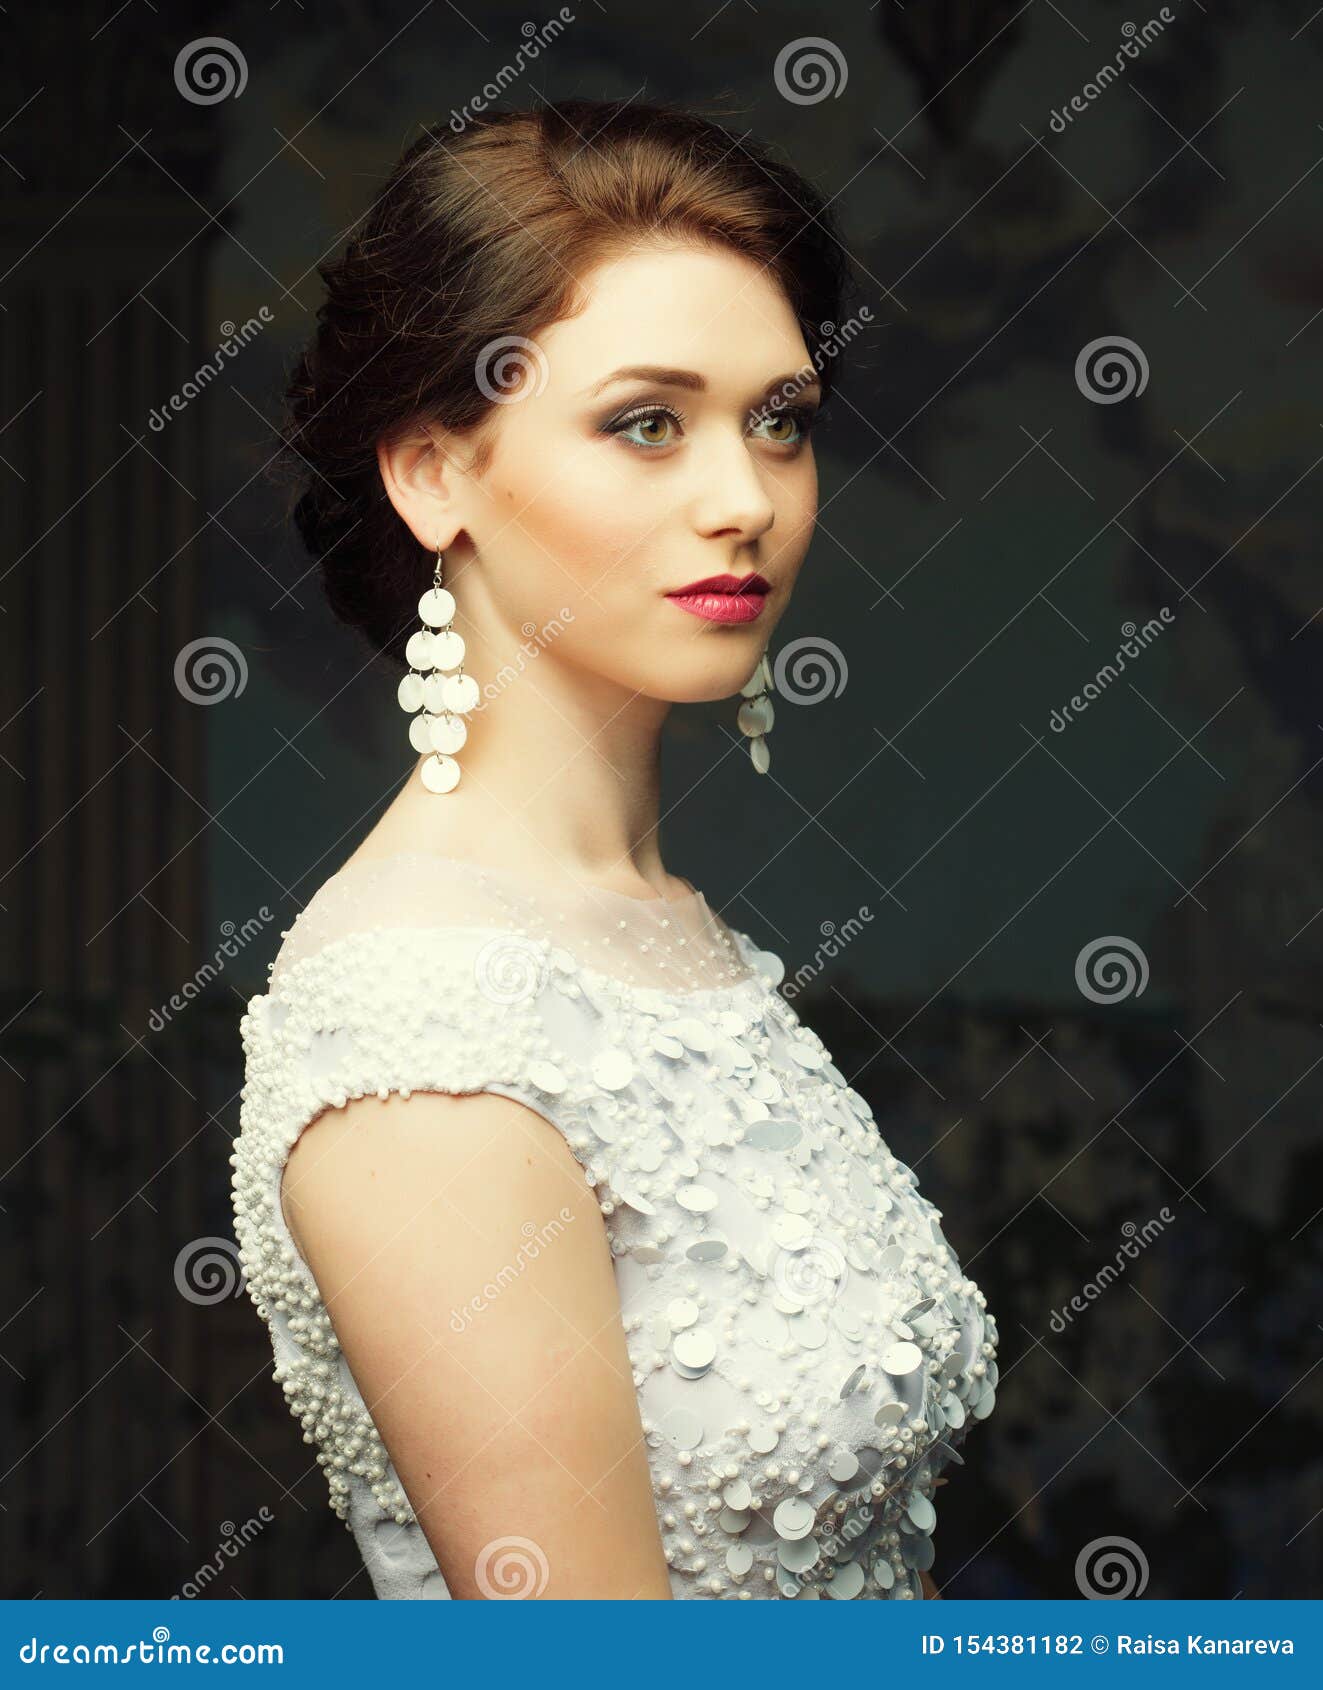 beautiful bride white dress earrings beauty youth happiness innocence close up beautiful bride white dress 154381182